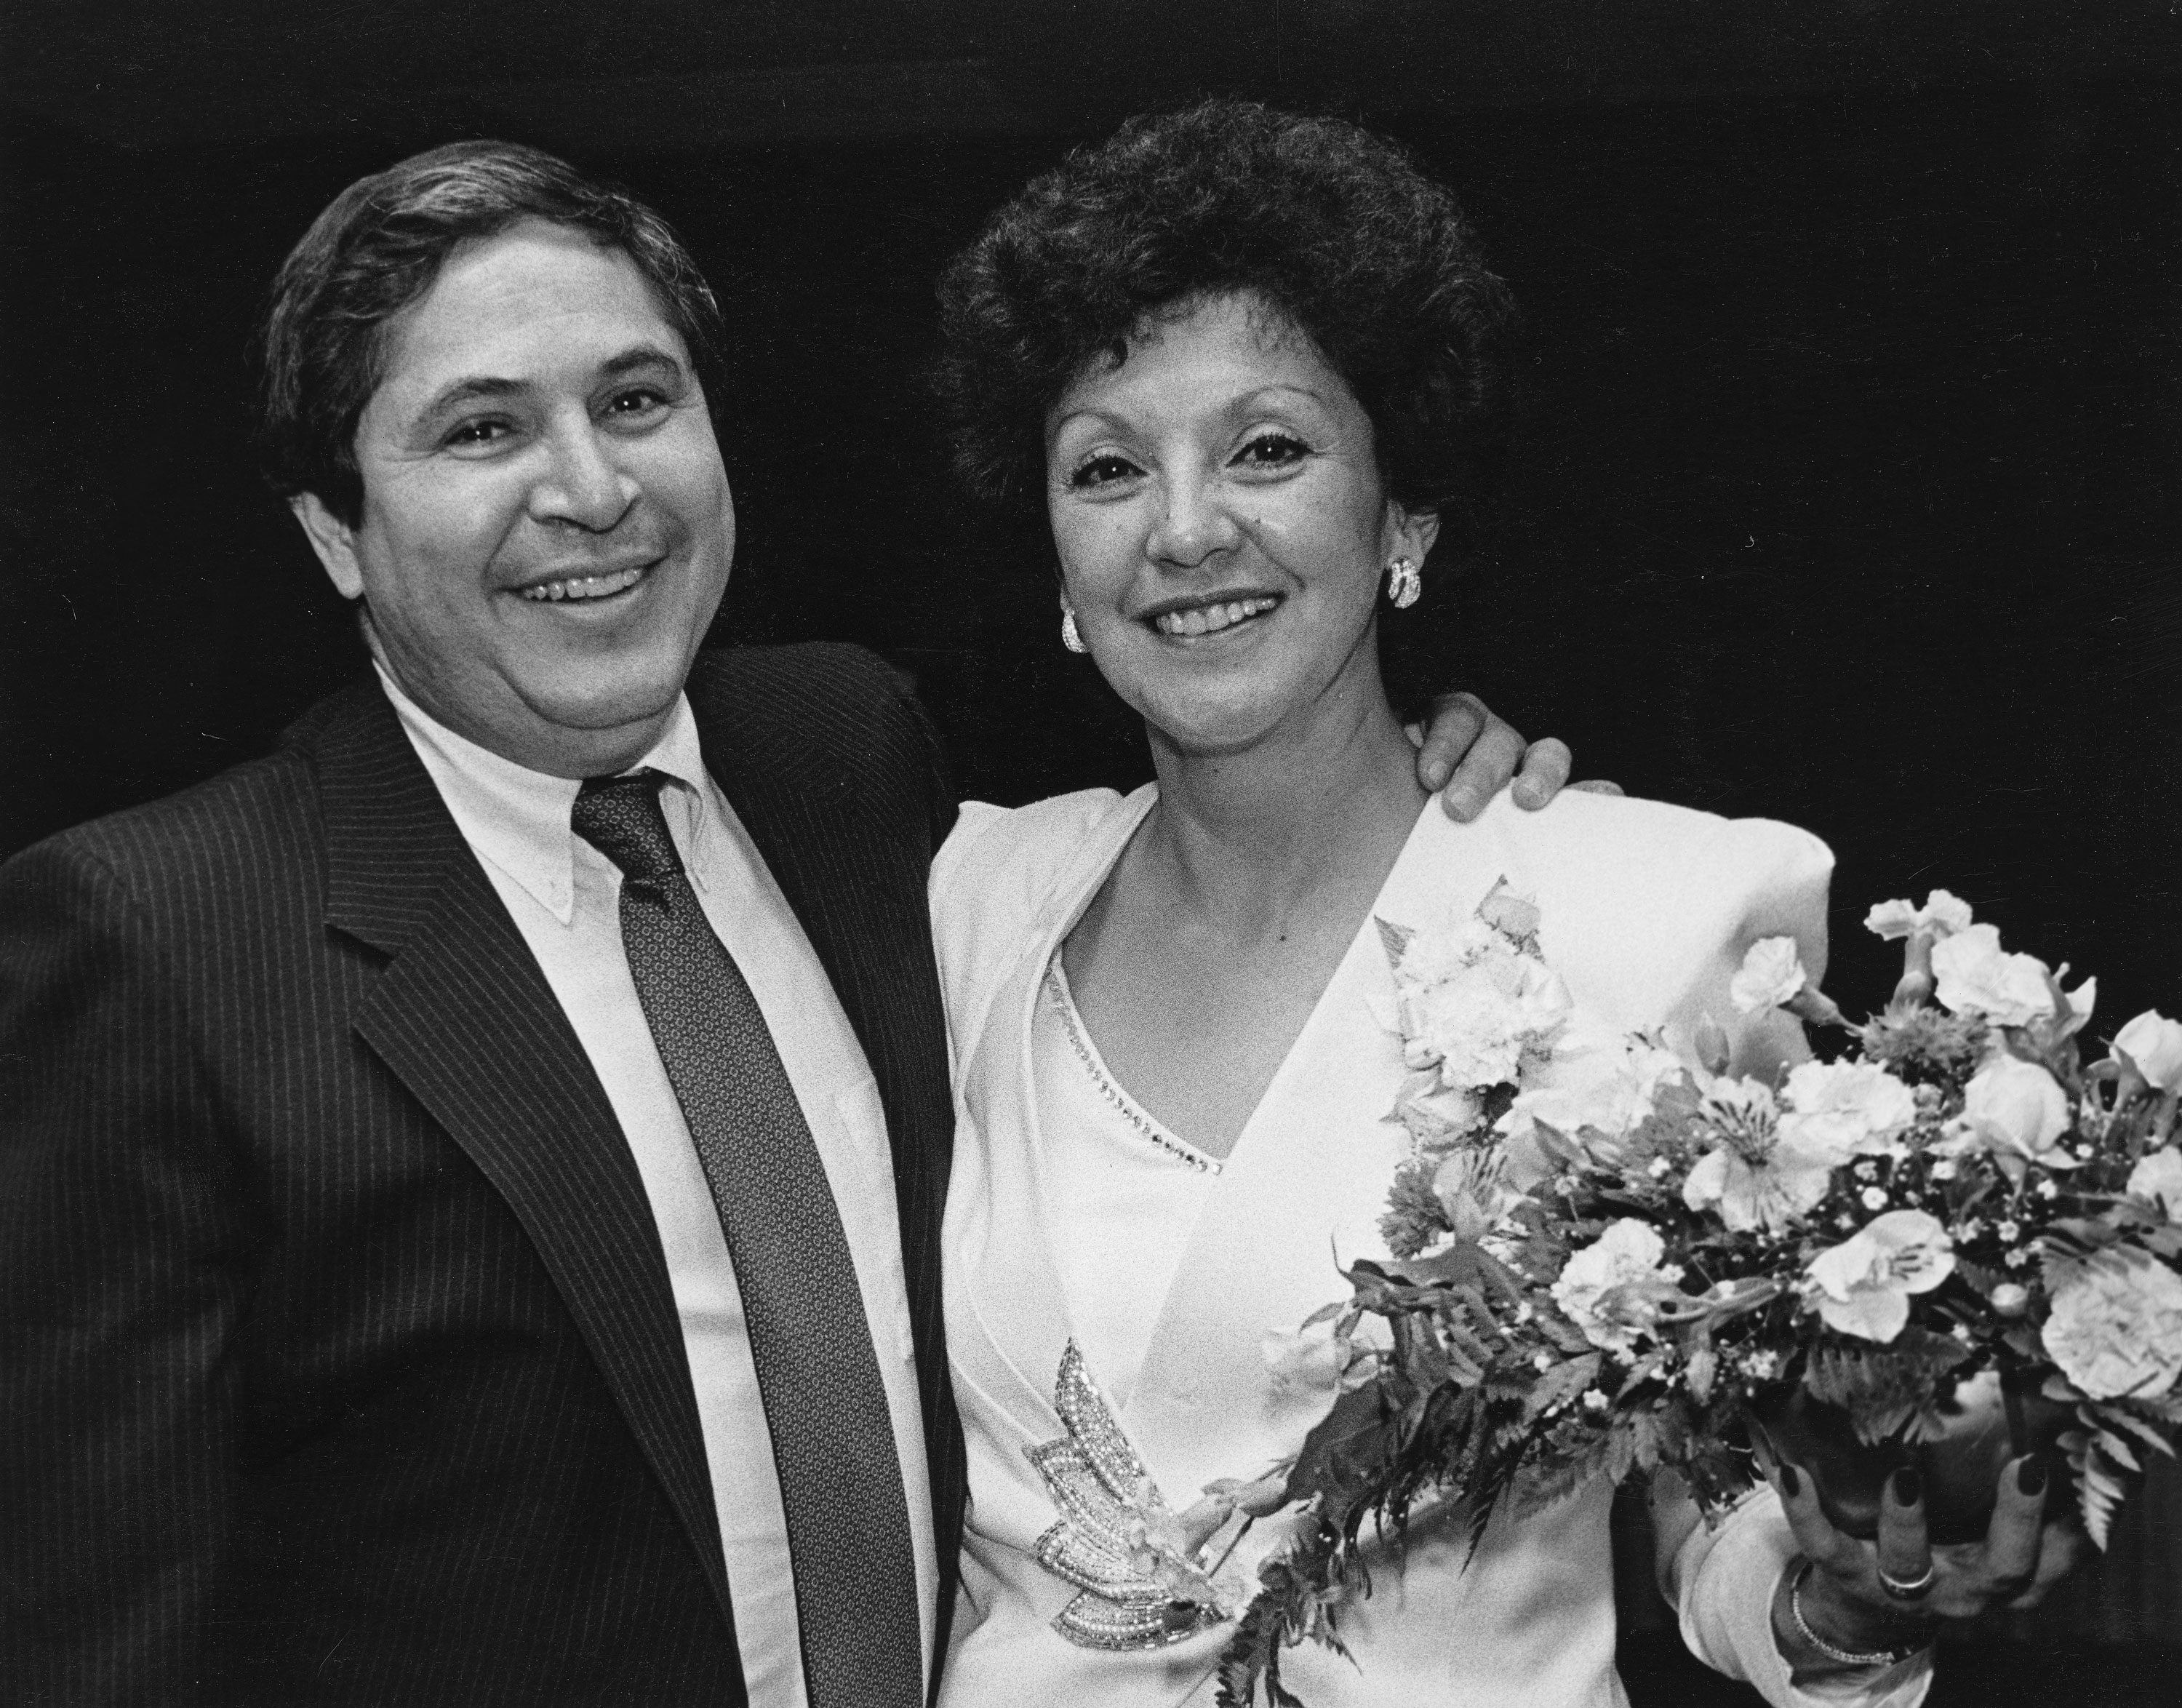 Richard and Virginia Castro